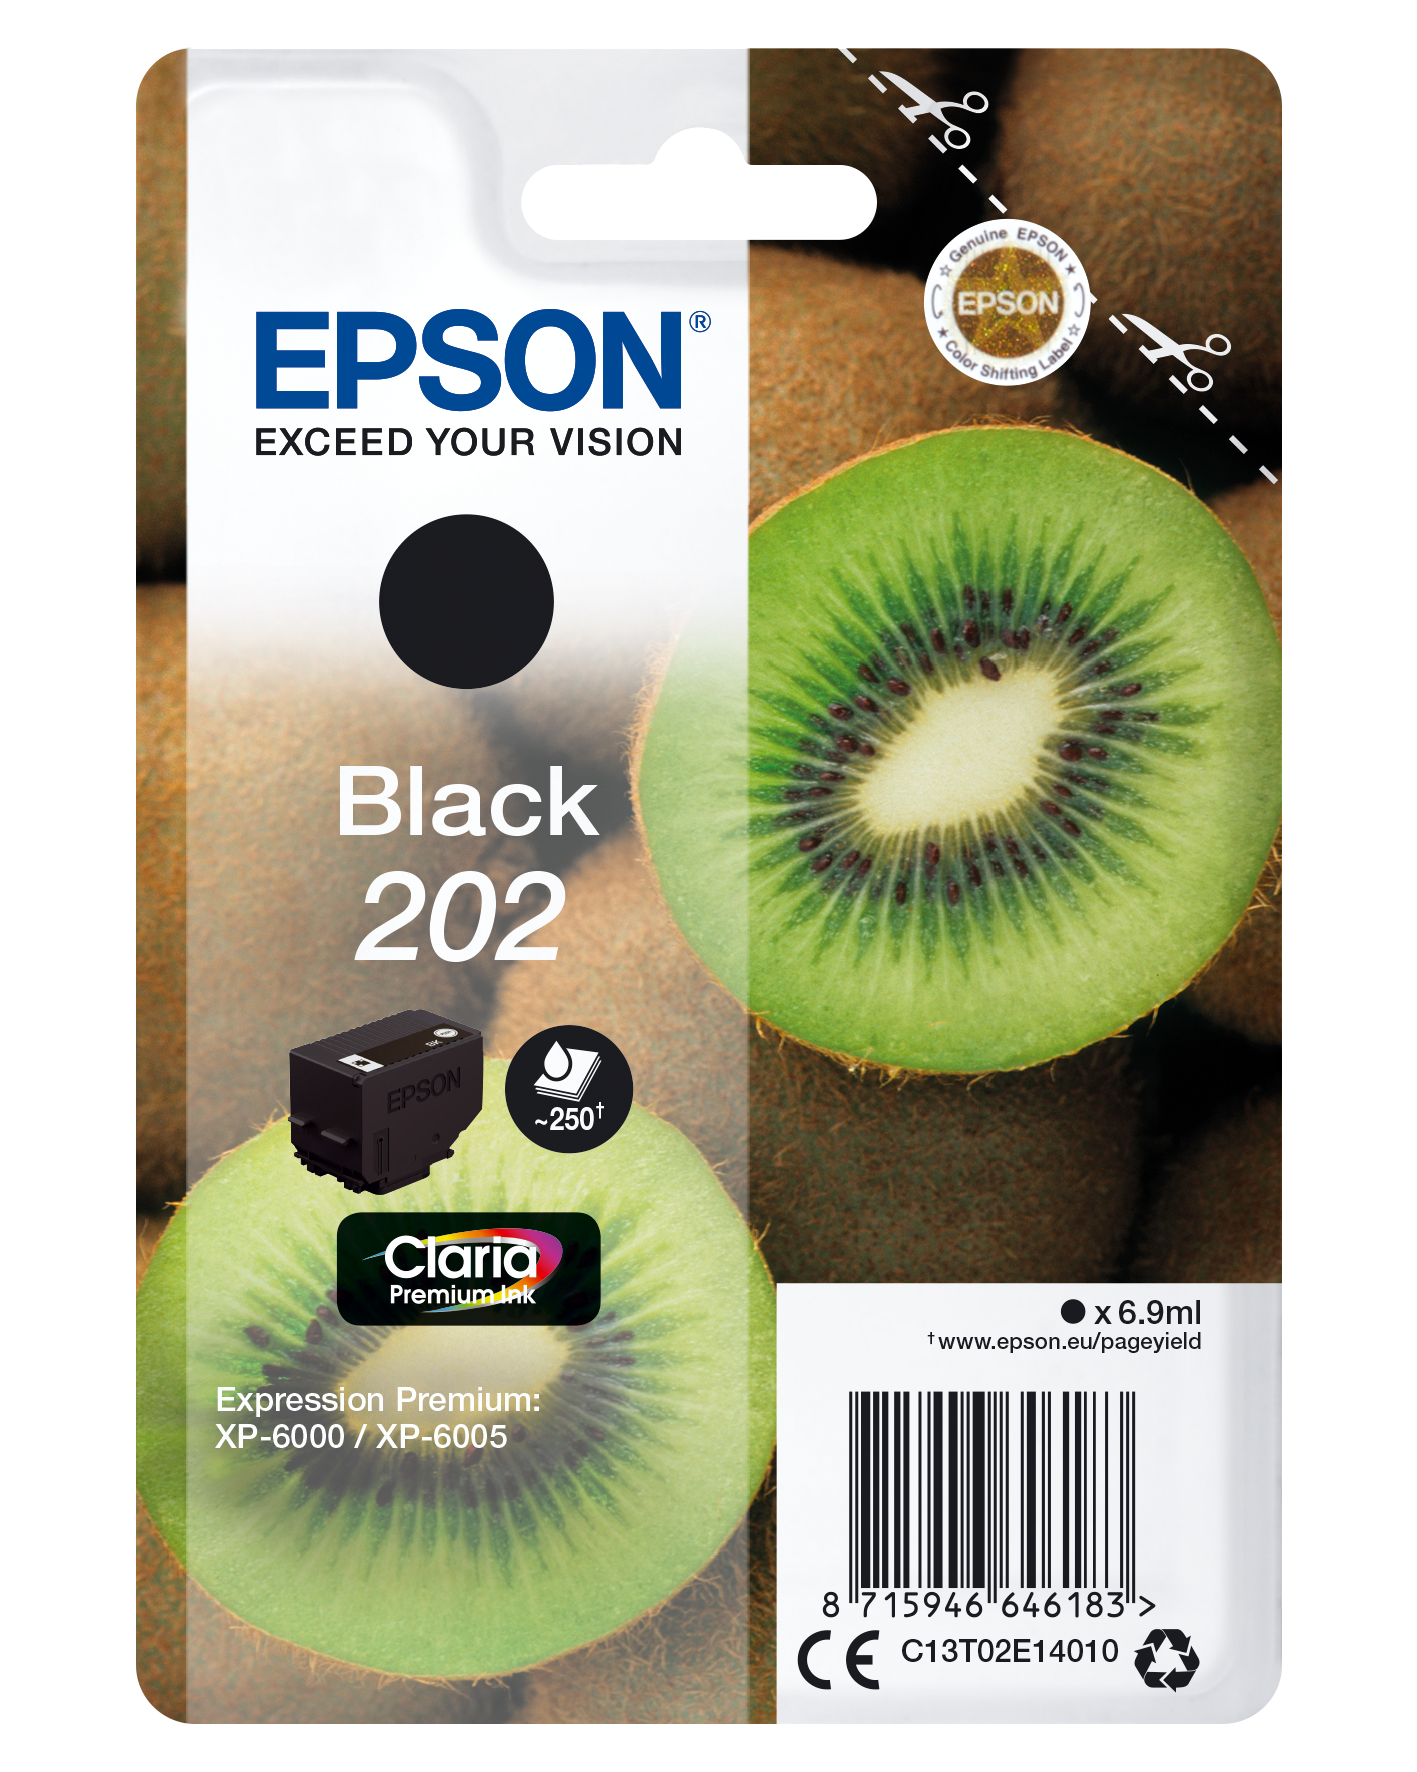 Epson Kiwi Singlepack Black 202 Claria Premium Ink single pack / zwart